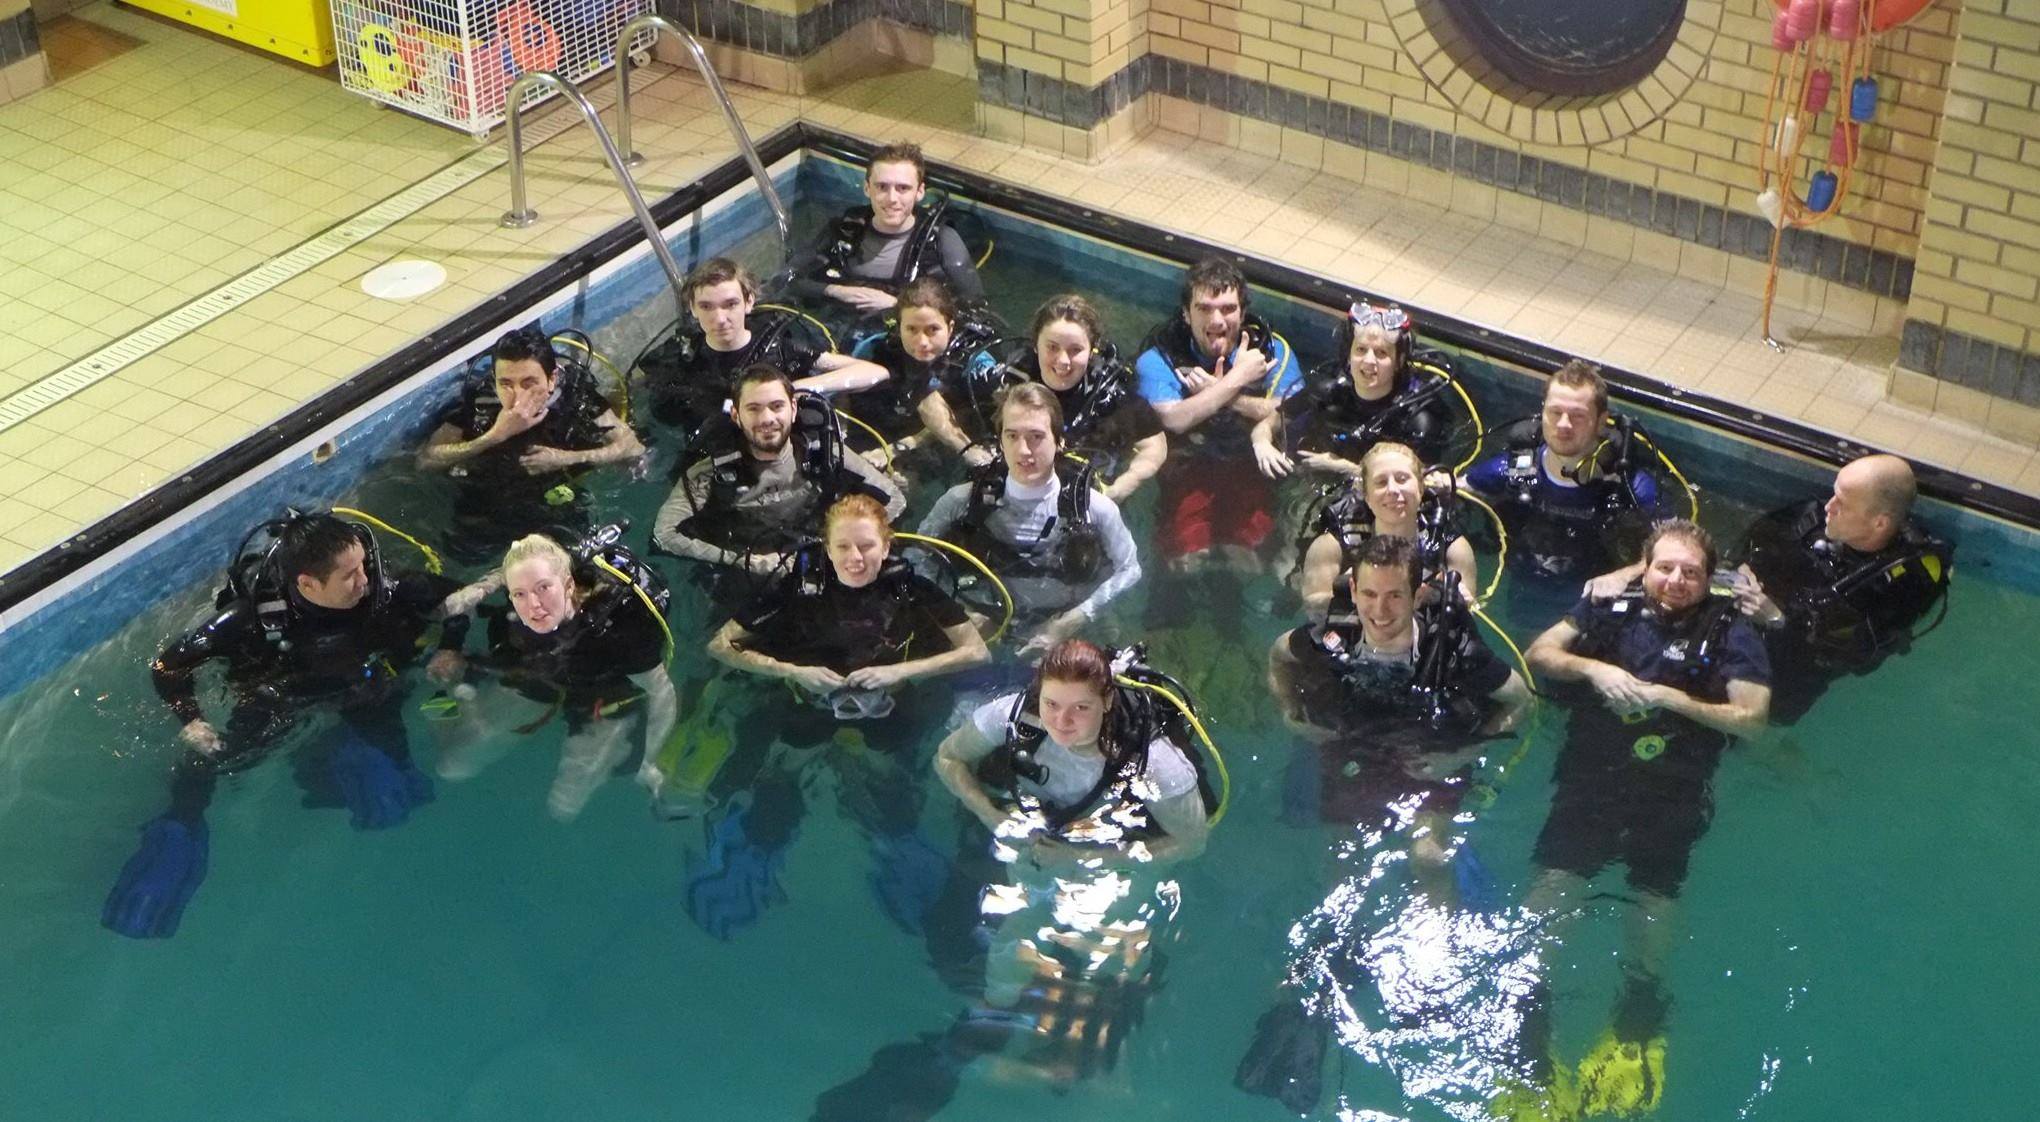 Solent University Sub-Aqua Club